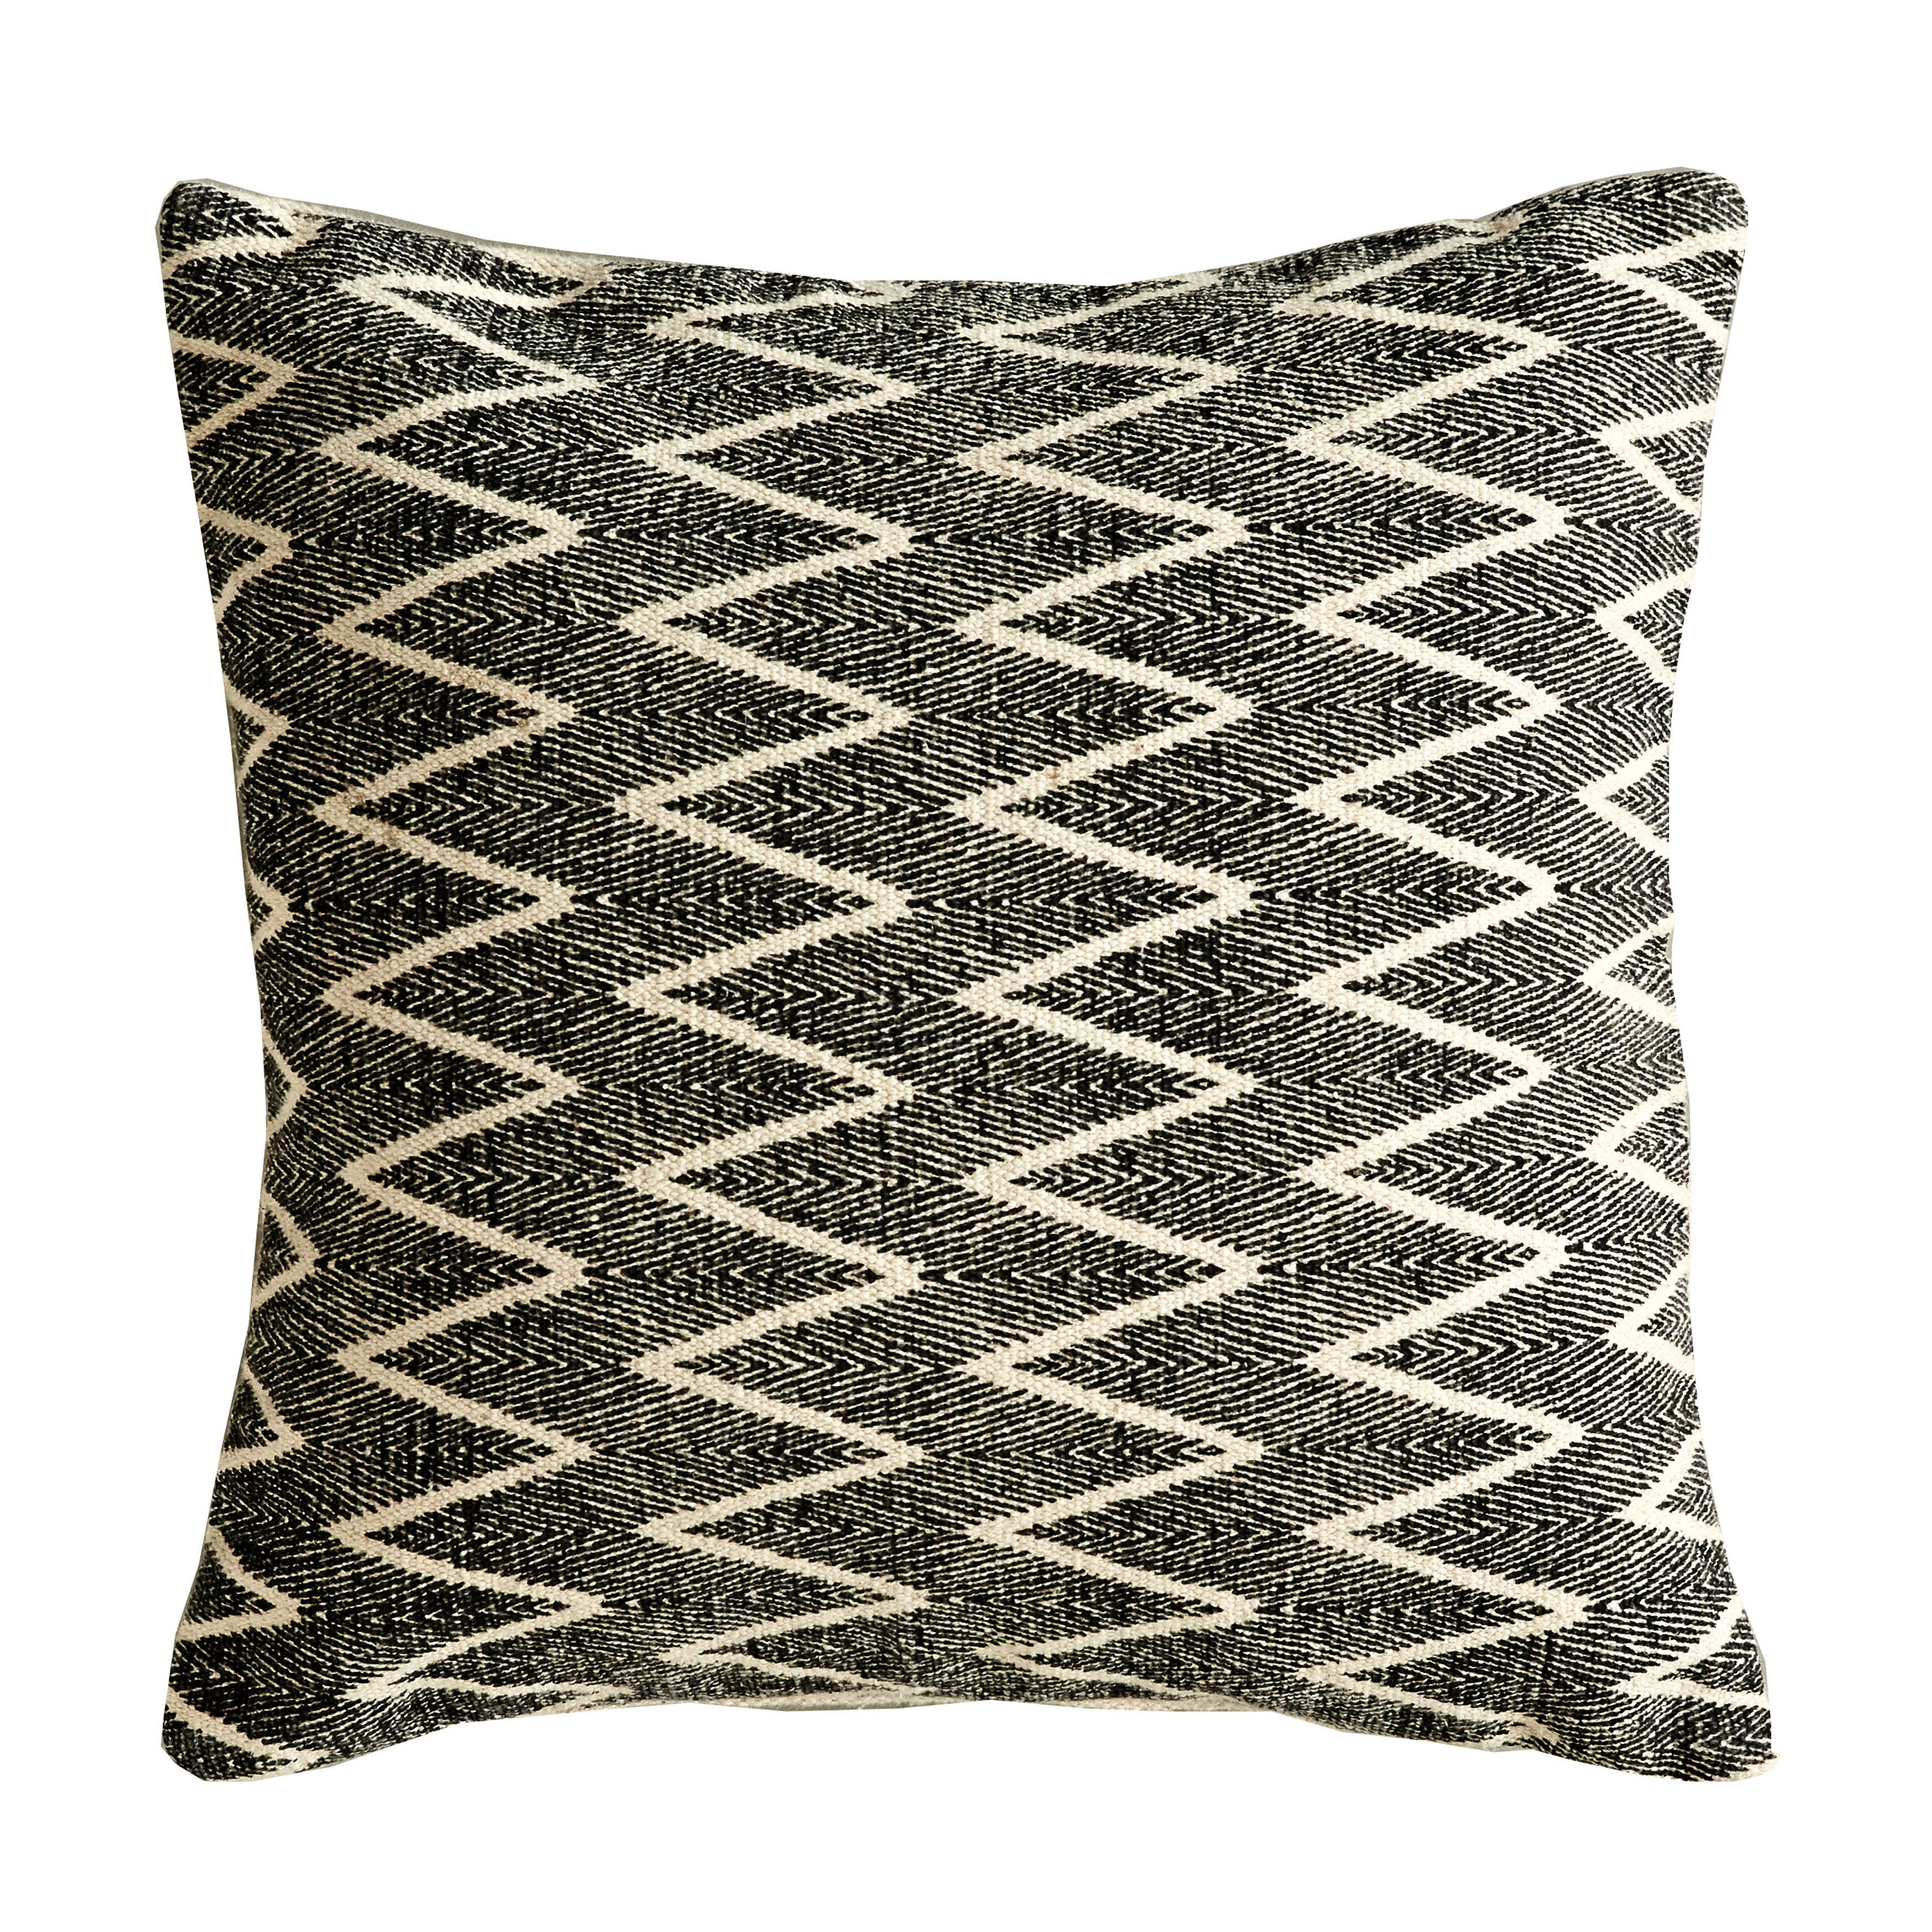 Square Cotton Black & White Pillow with Zig Zag Design - Image 0